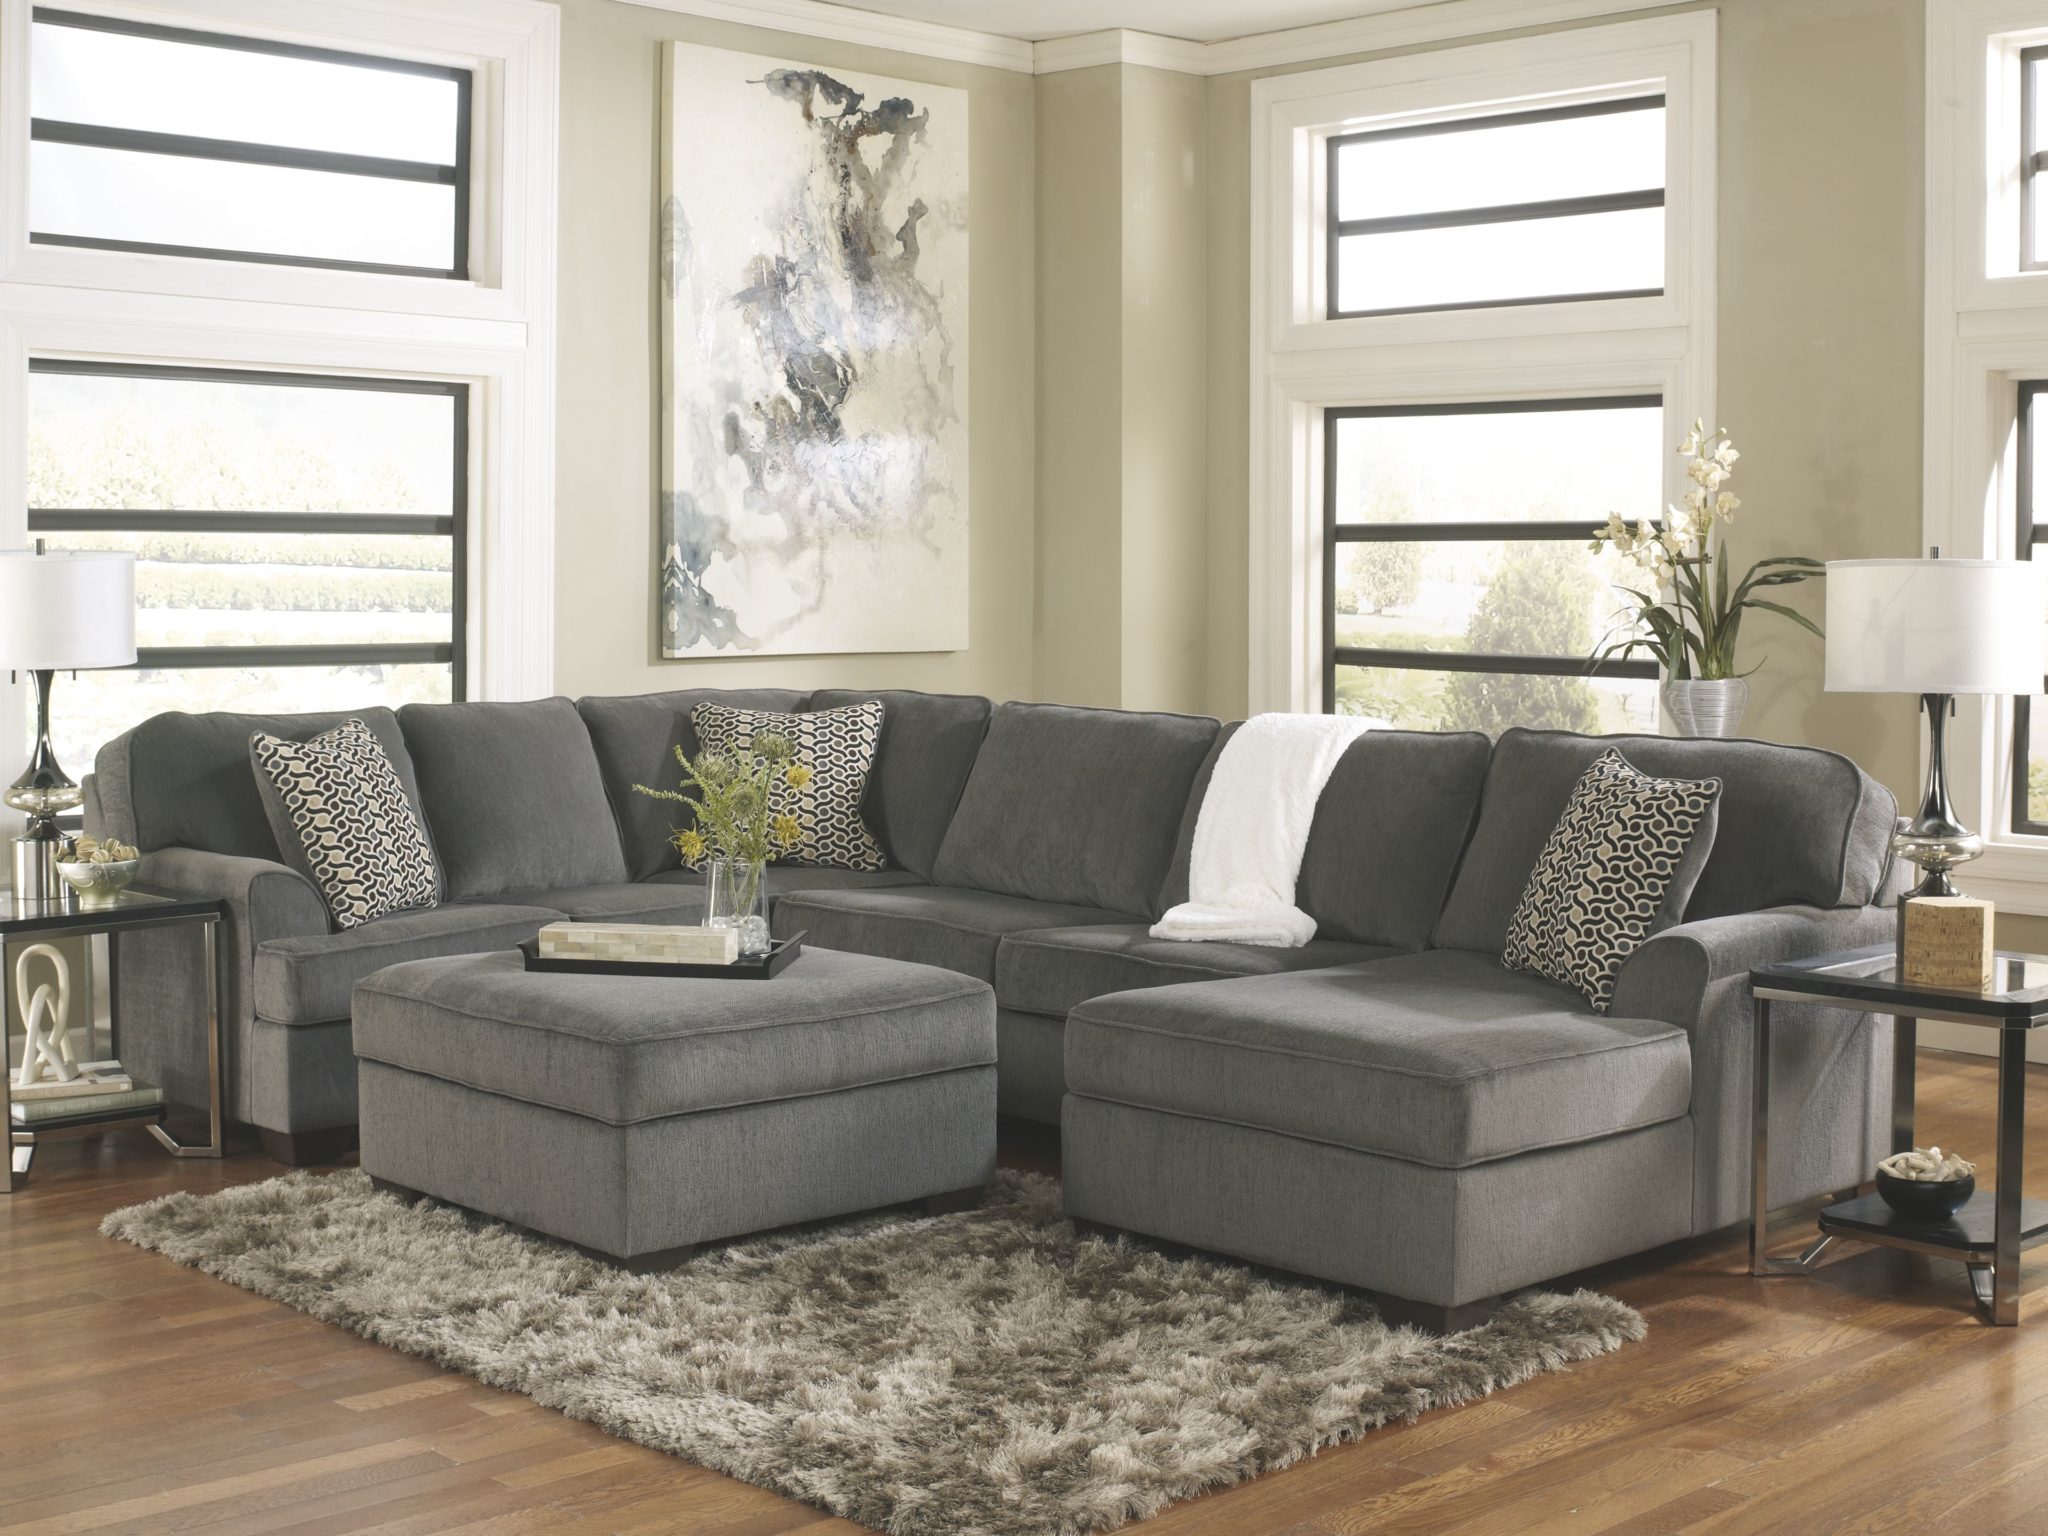 armless living room furniture